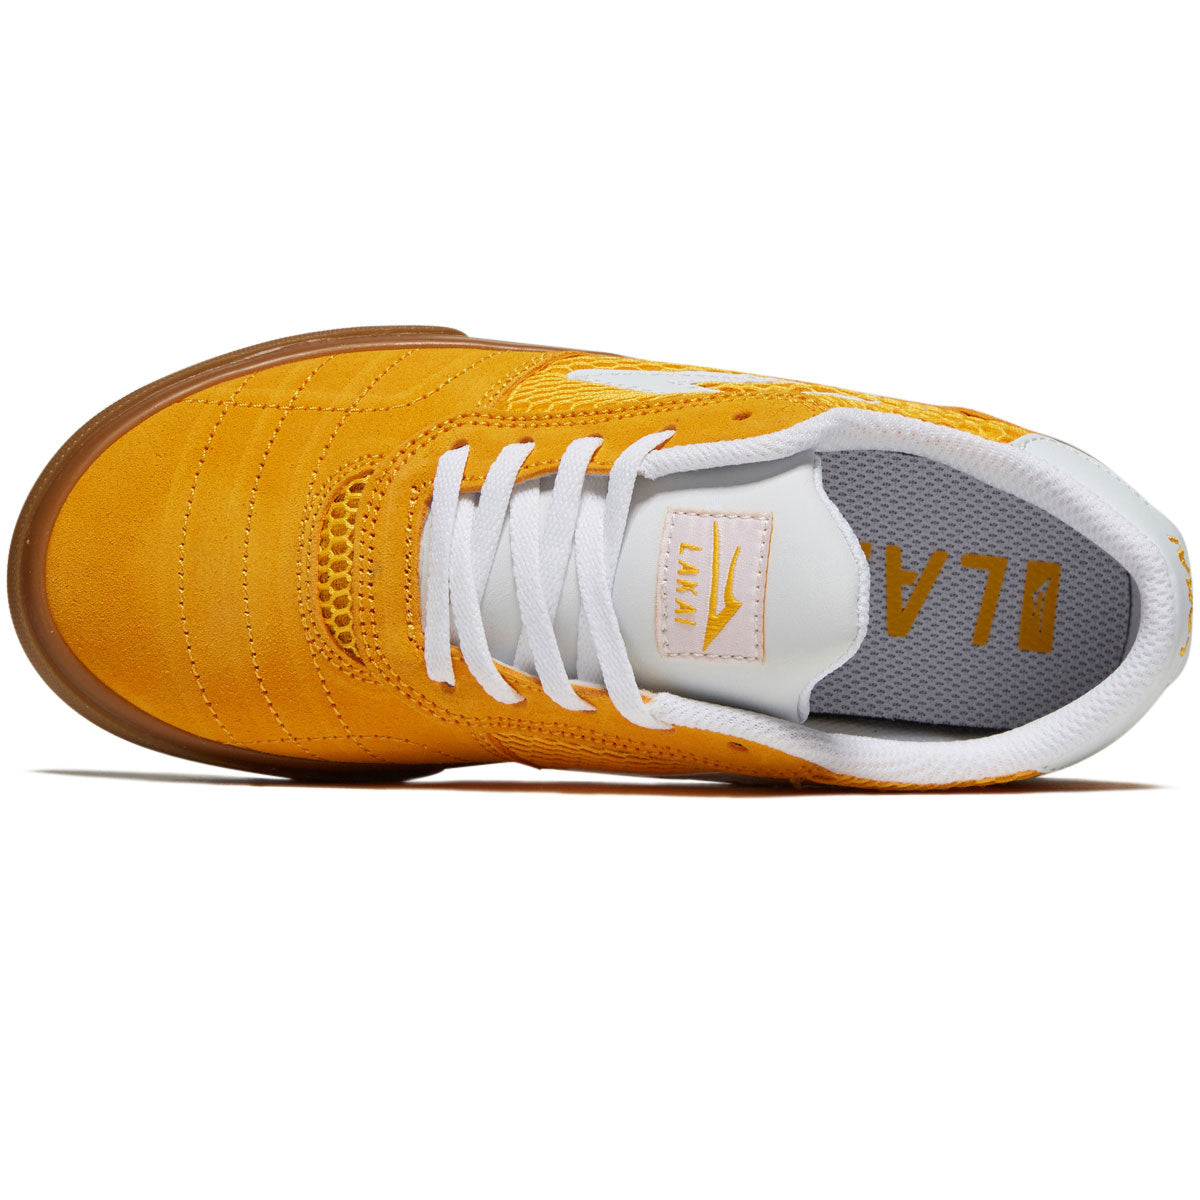 Lakai Youth Cambridge Shoes - Gold/Gum Suede image 3